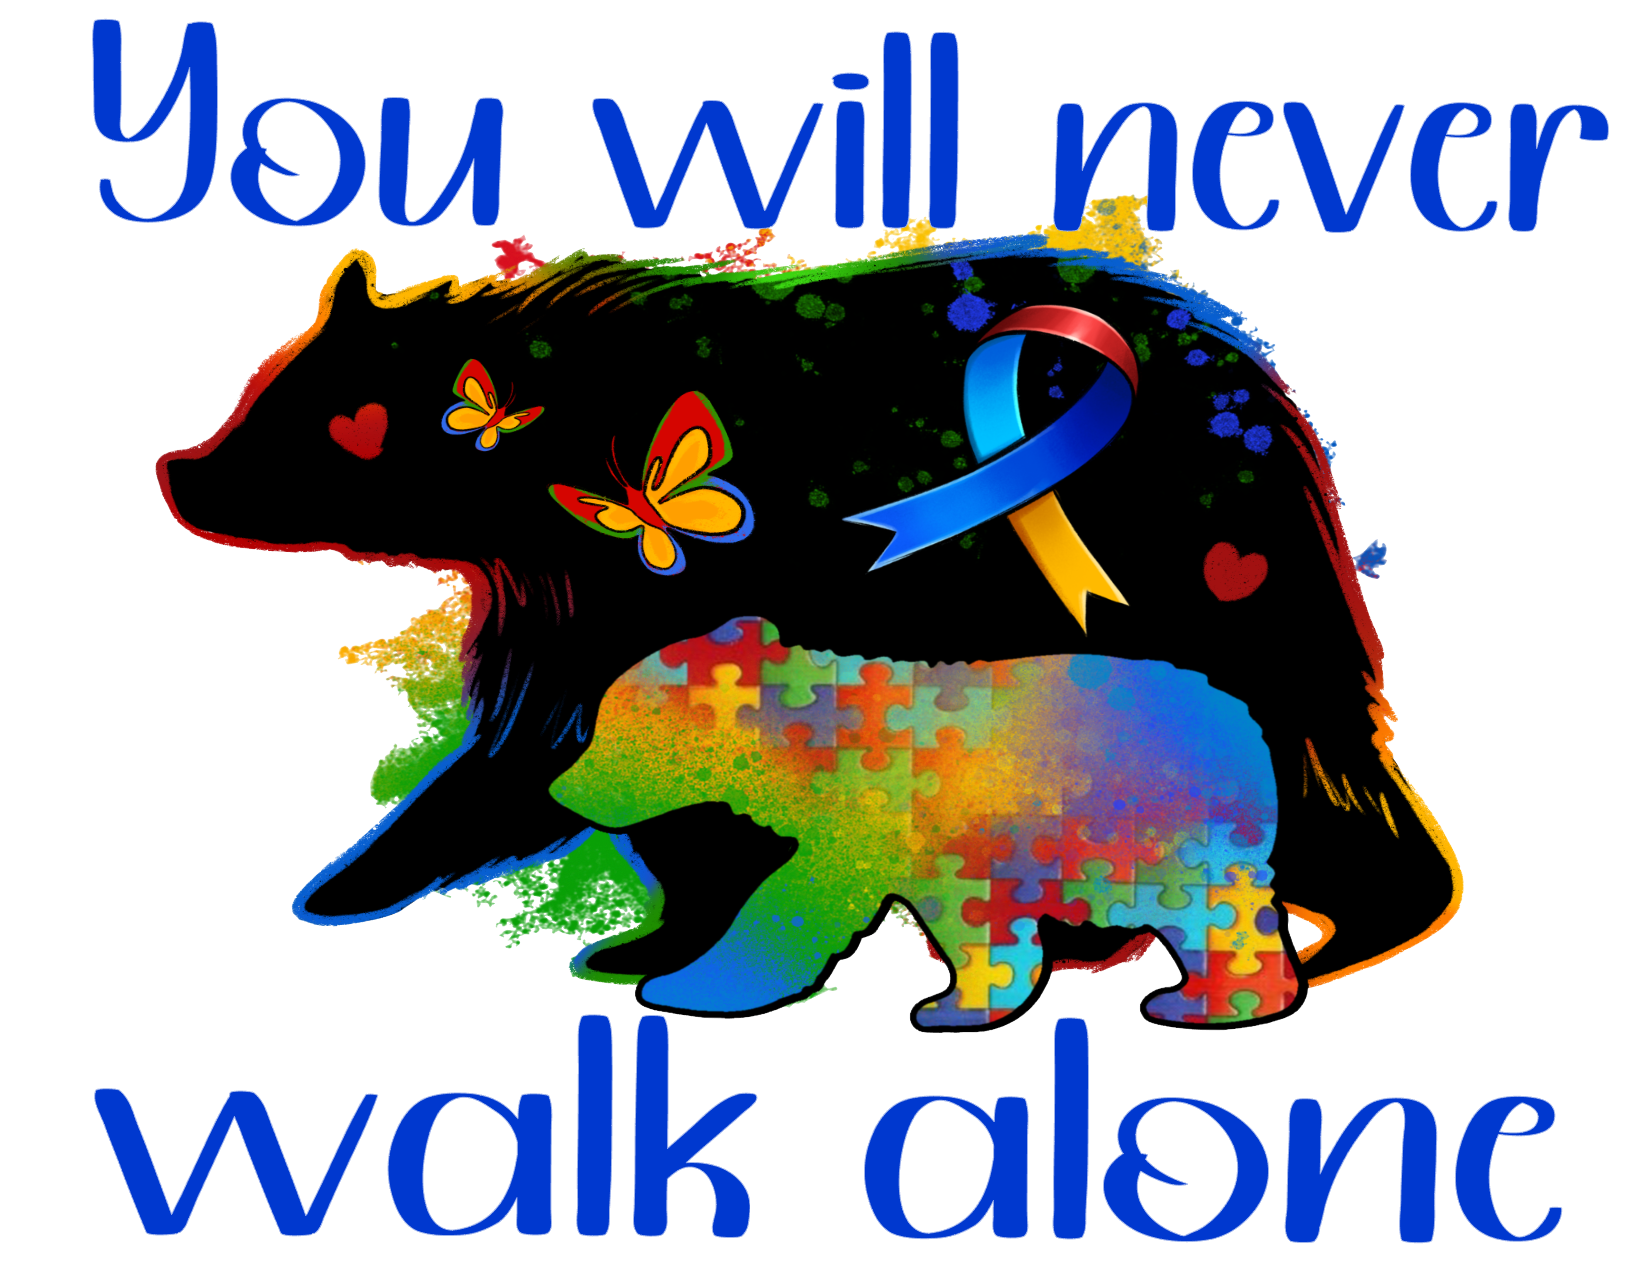 #408 You will never walk alone